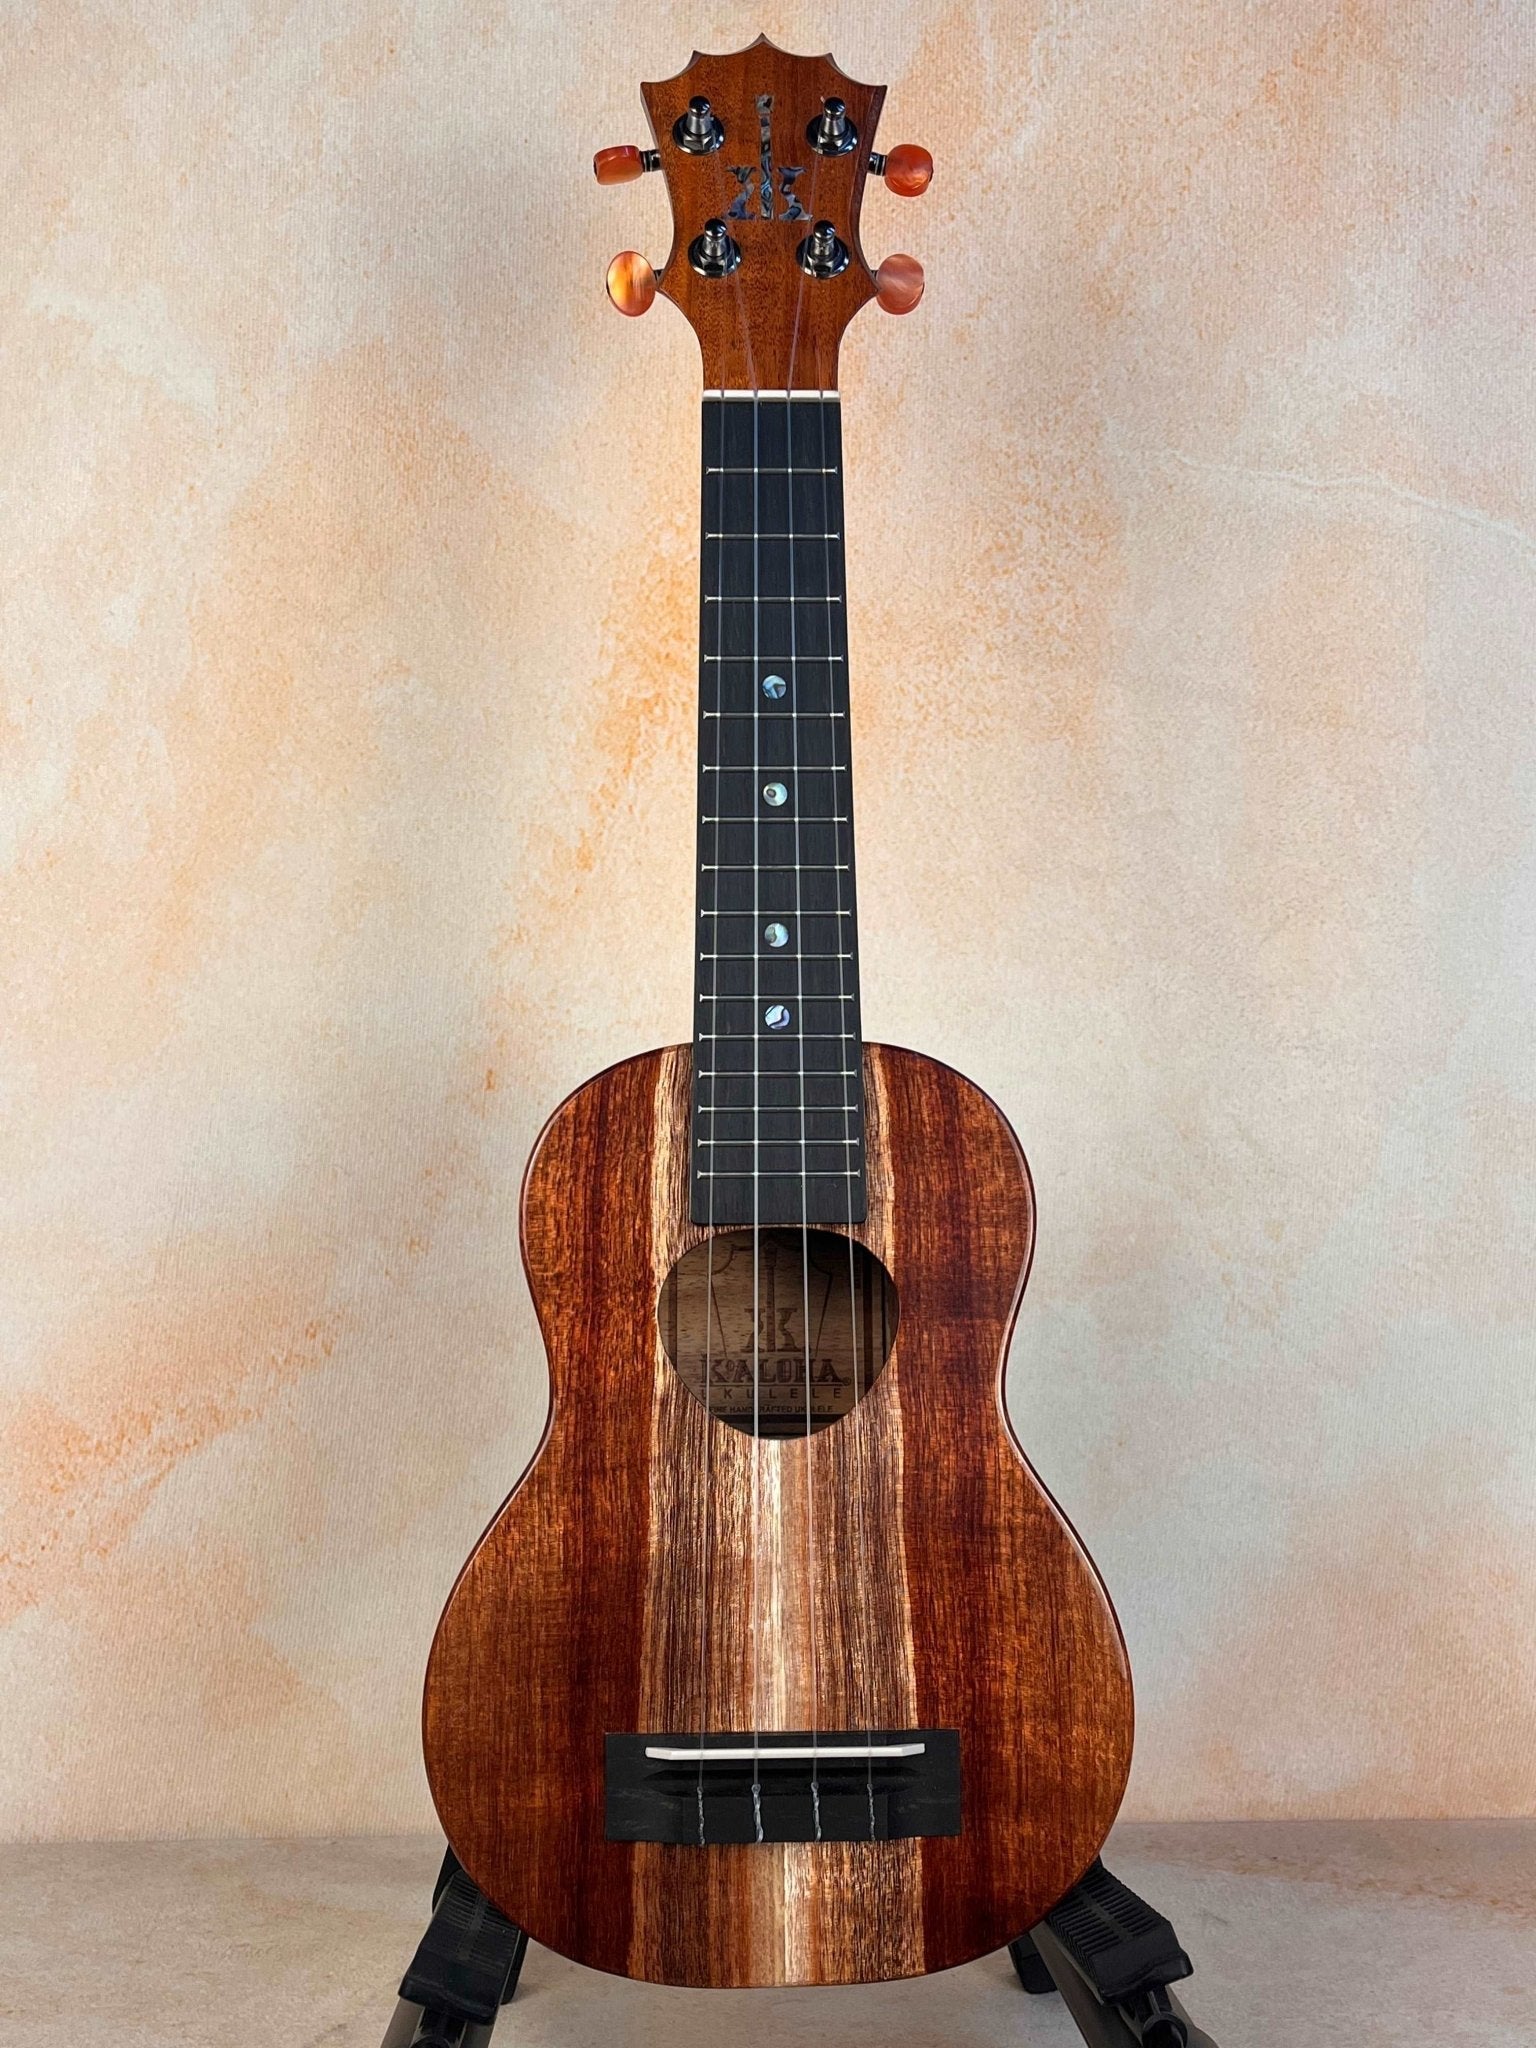 Wooden Ukulele Small Guitar Wooden Soprano Ukulele Guitar Music Instrument  for K